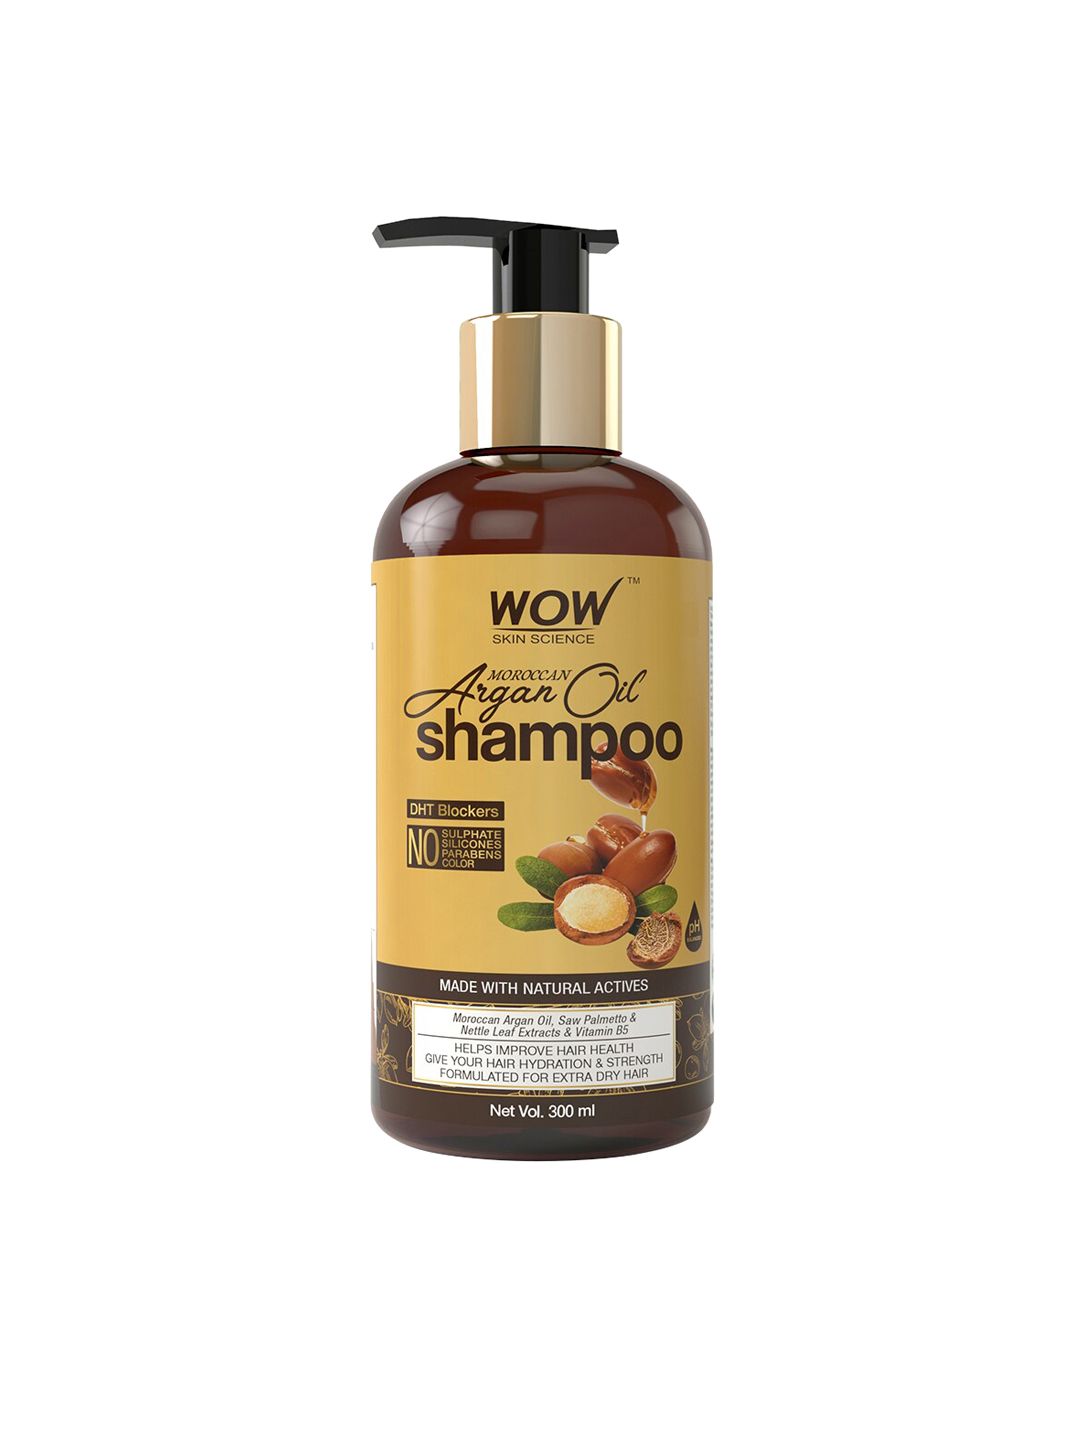 WOW SKIN SCIENCE Moroccan Argan Oil Shampoo - 300 ml Price in India